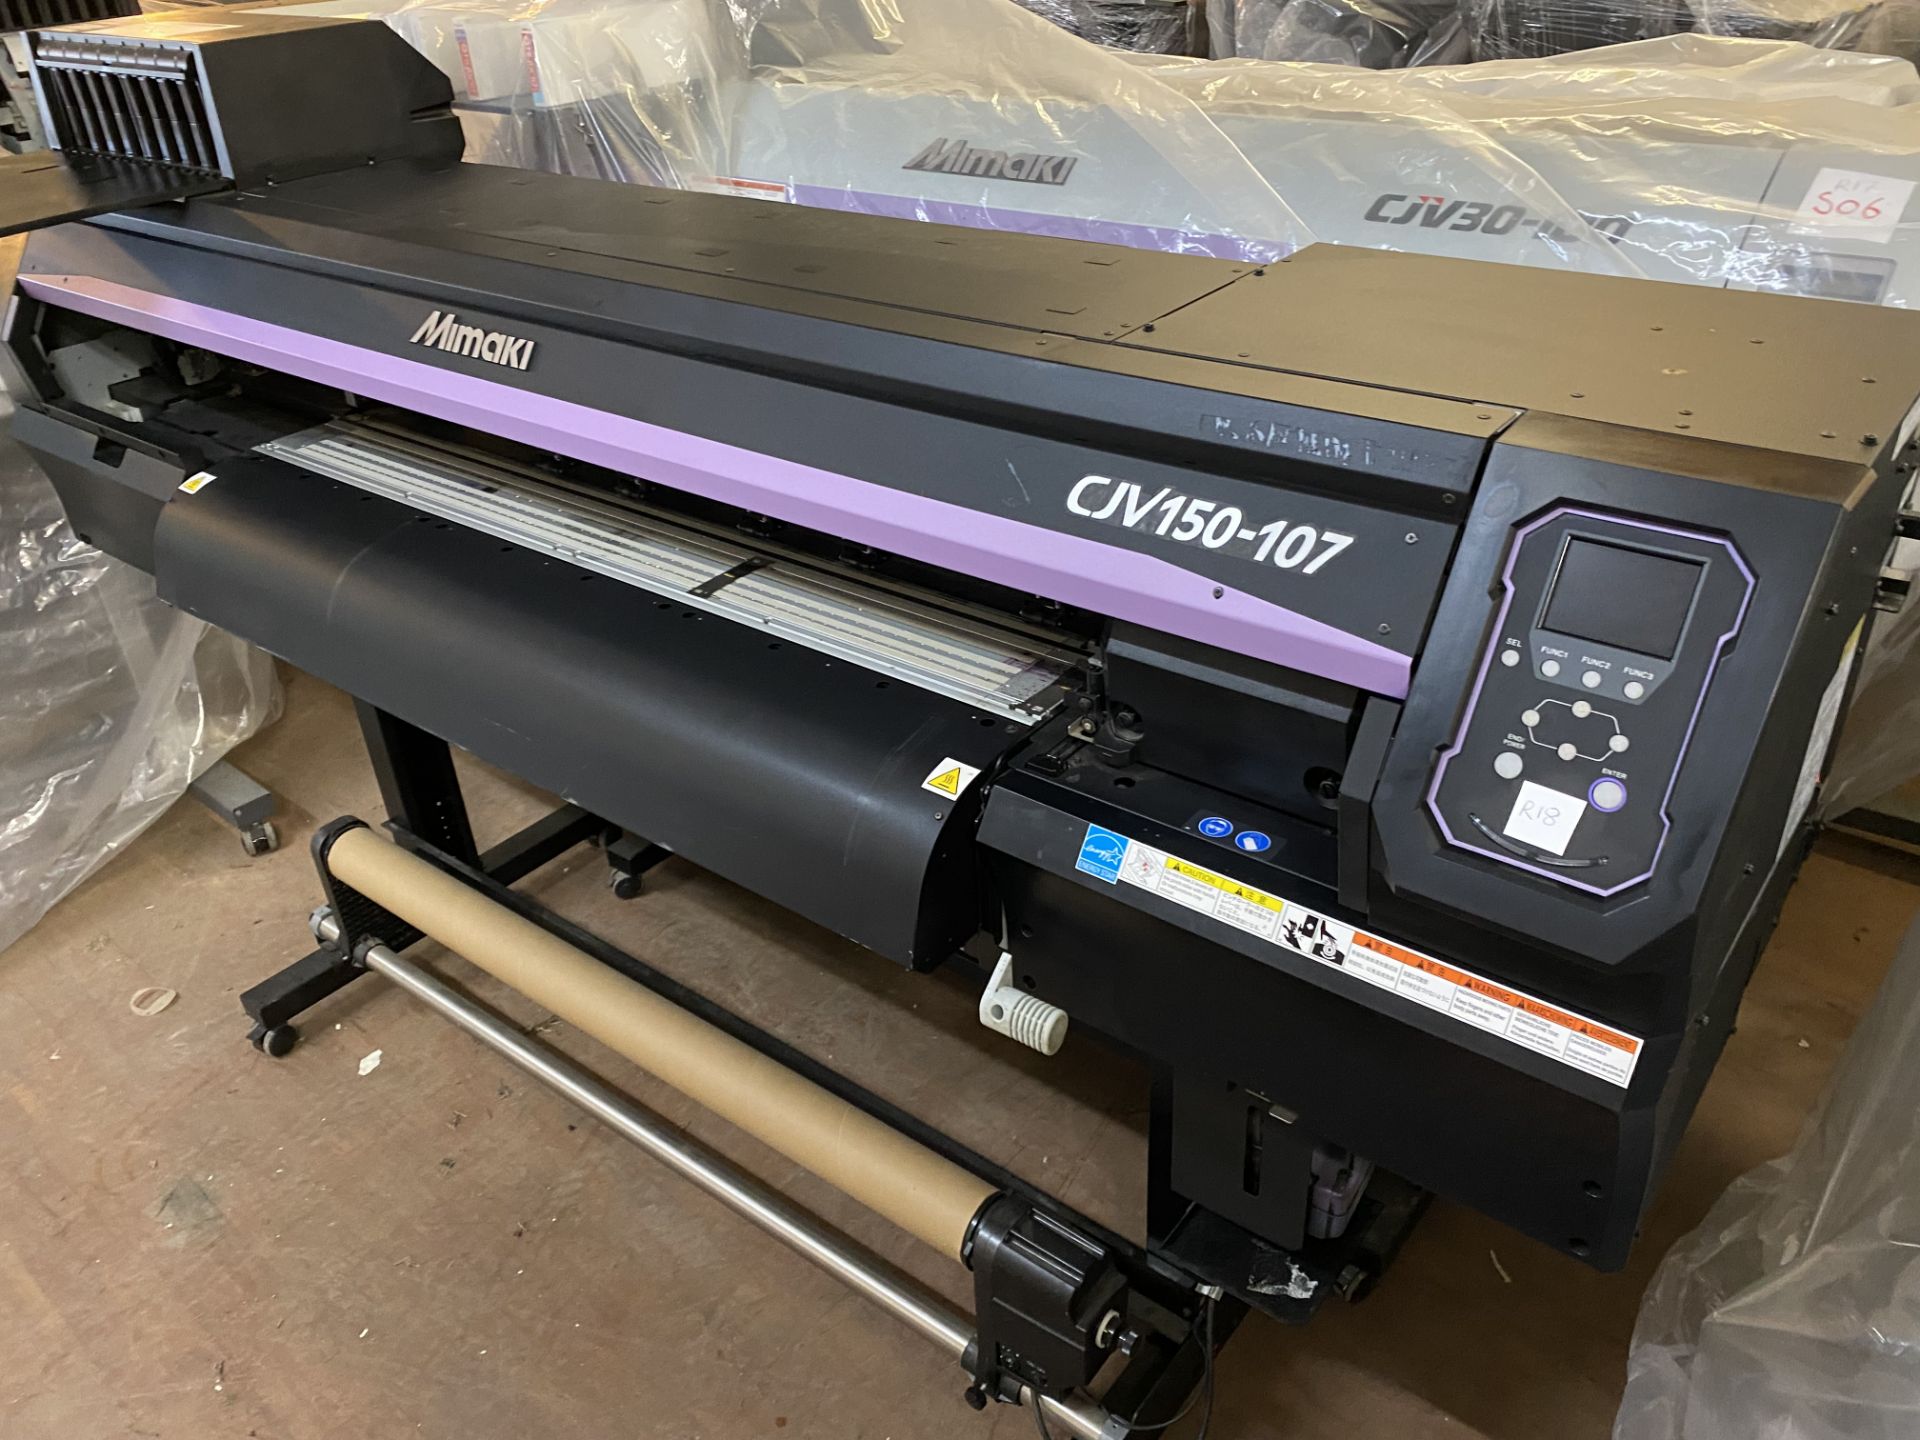 (R18) Mimaki CJV 150-107 Eco Solvent Print And Cut Large Format Printer - Bild 2 aus 3